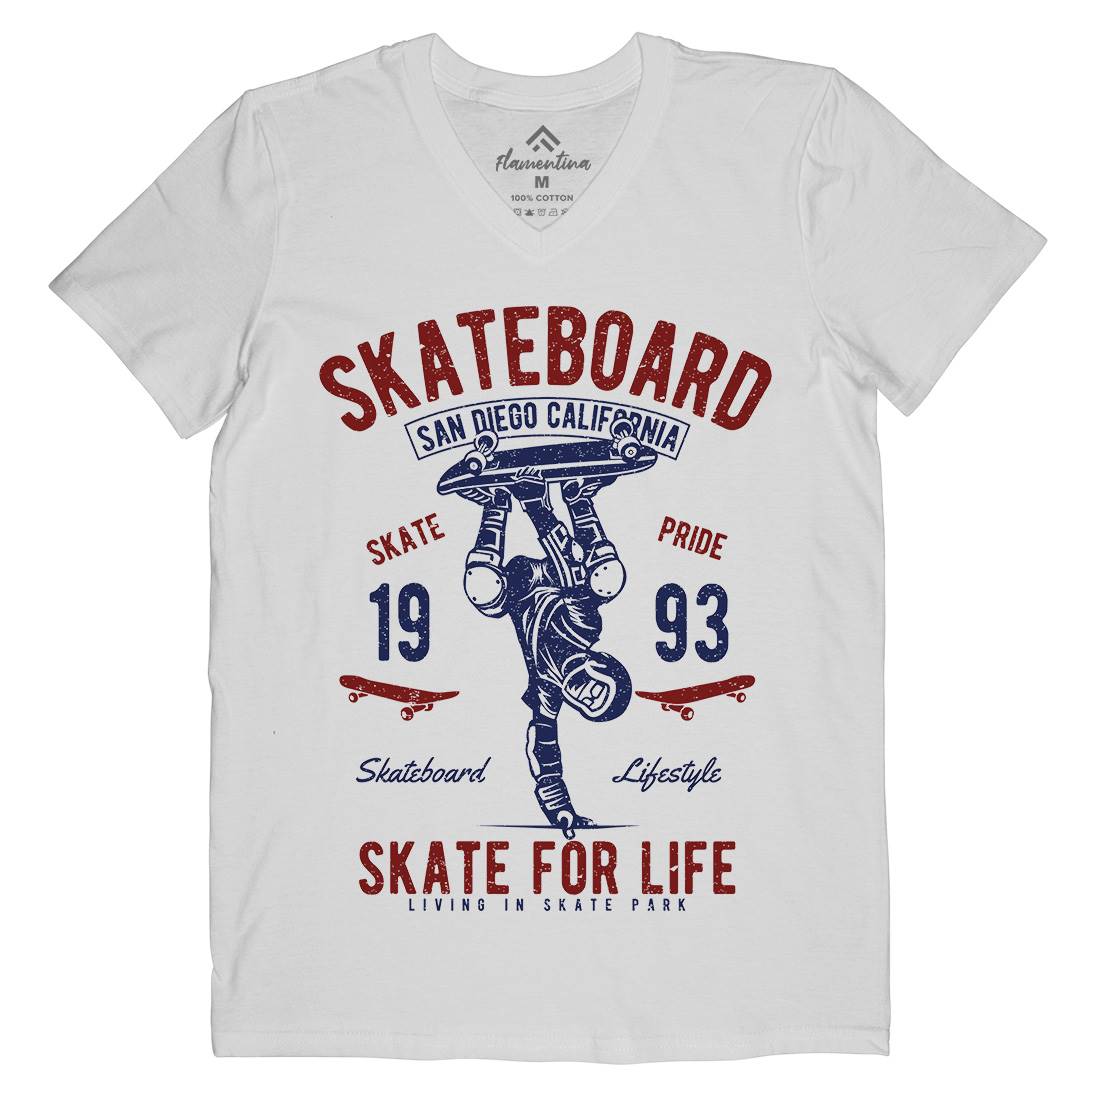 Skate For Life Mens Organic V-Neck T-Shirt Skate A143